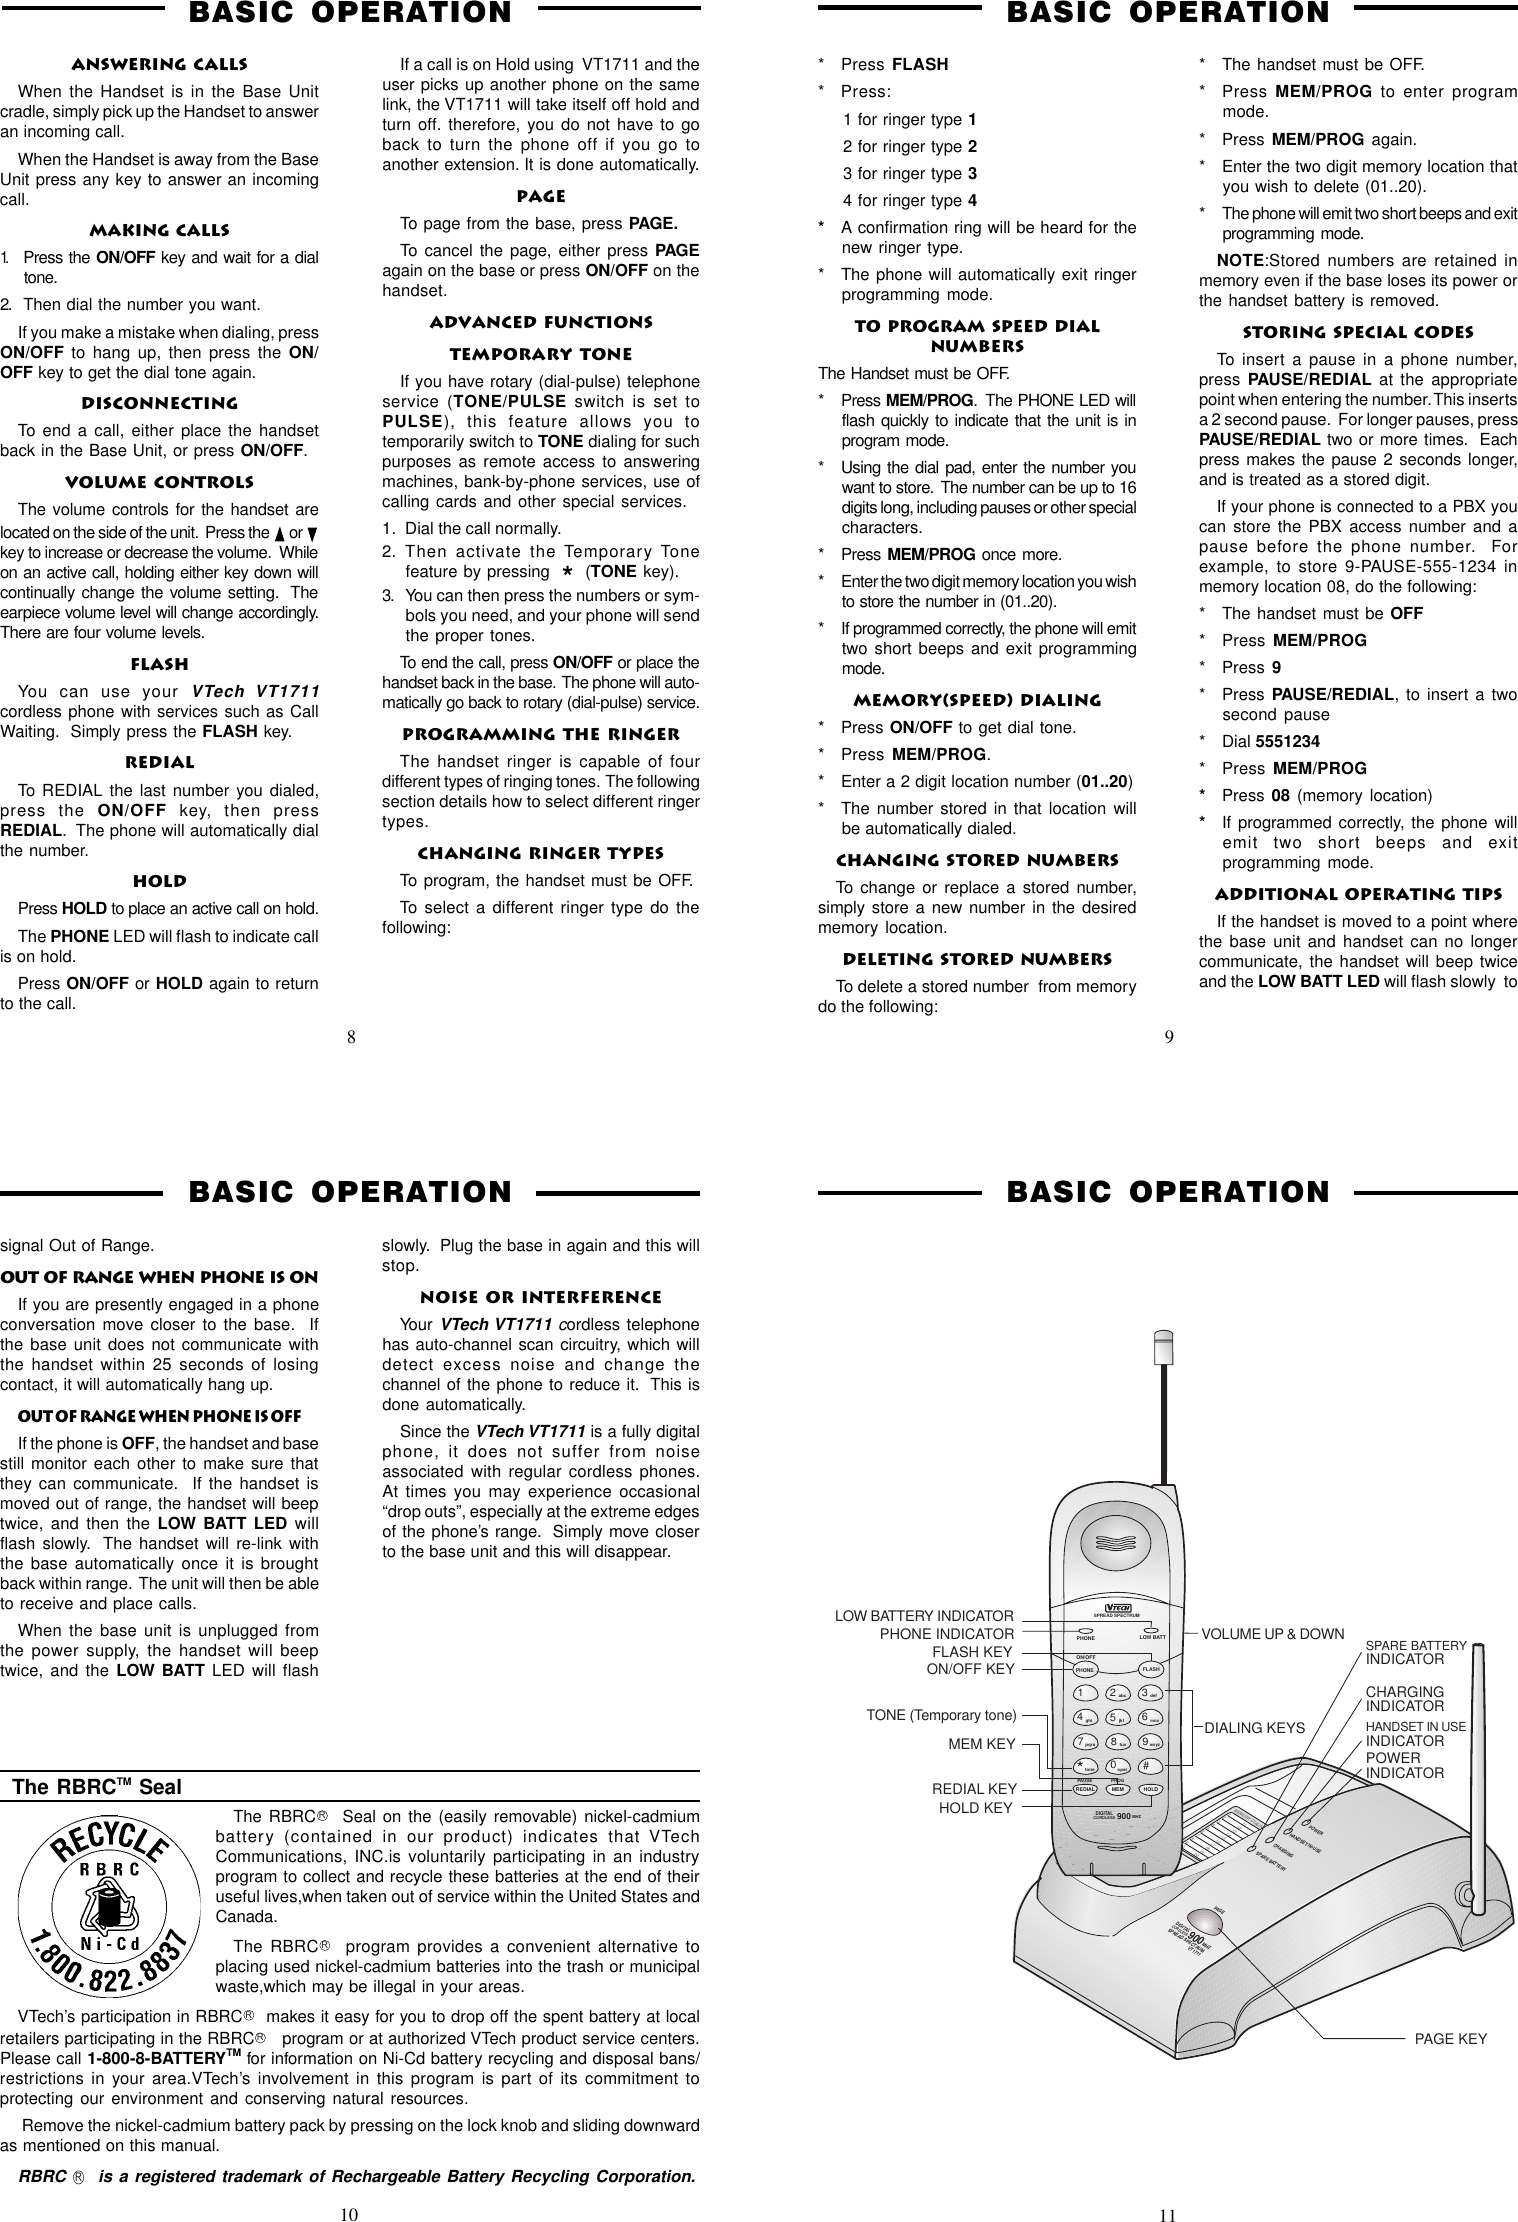 Page 3 of 4 - Vtech Vtech-Vt-1711-Users-Manual- VT1711JUN23  Vtech-vt-1711-users-manual